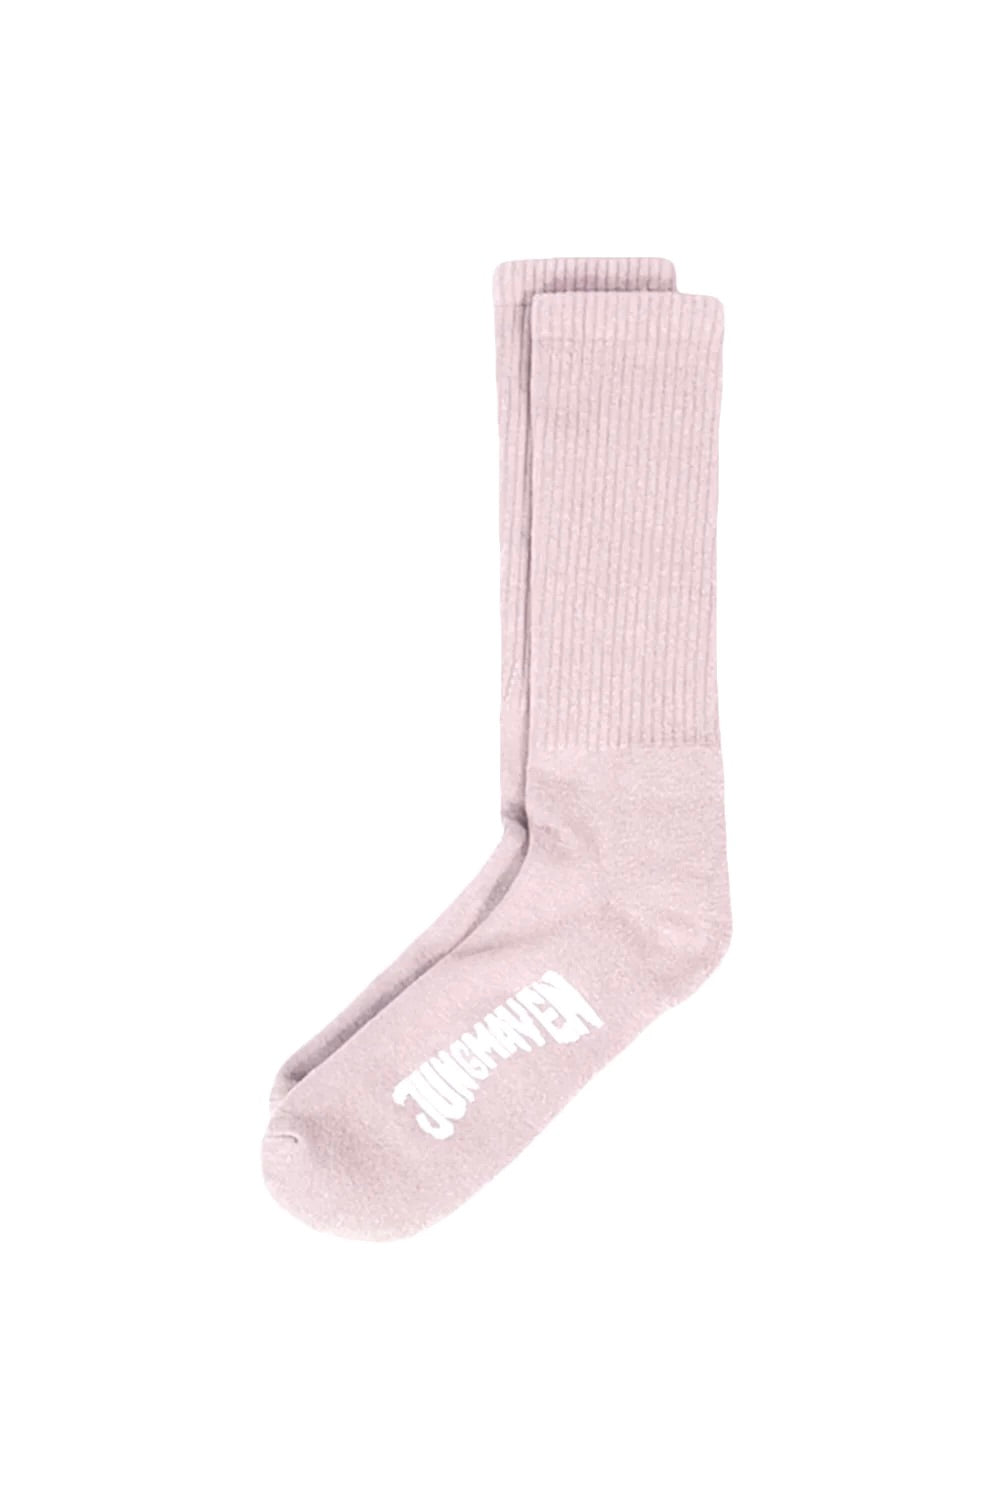 Jungmaven Hemp Crew Socks / Dusty Pink